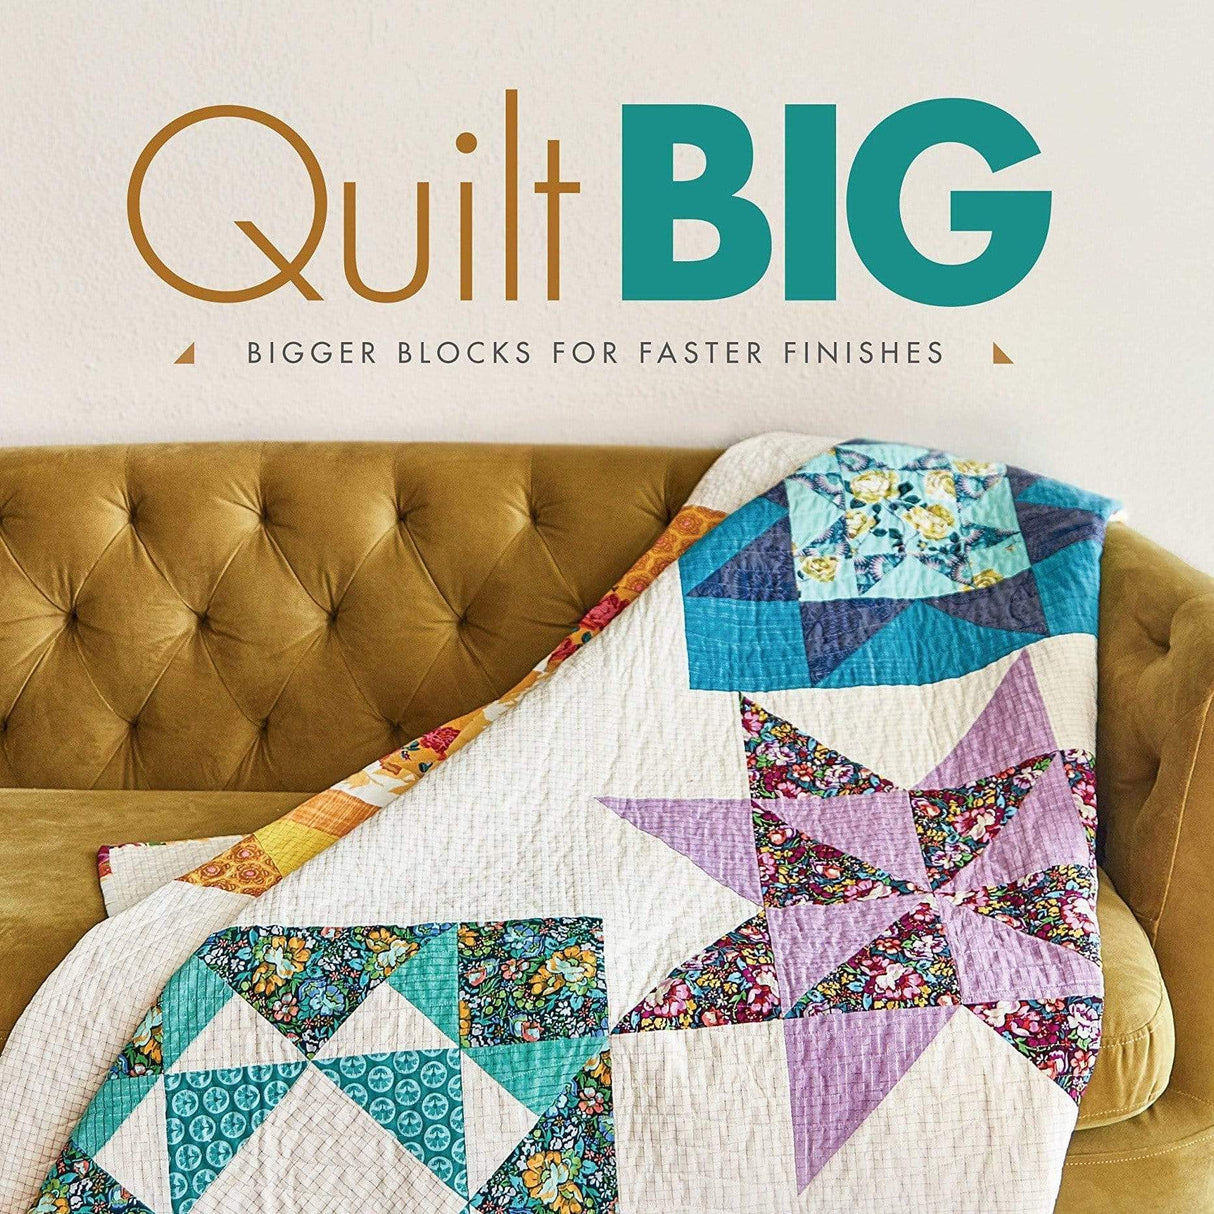 GMC book Quilt Big by Jemima Flendt